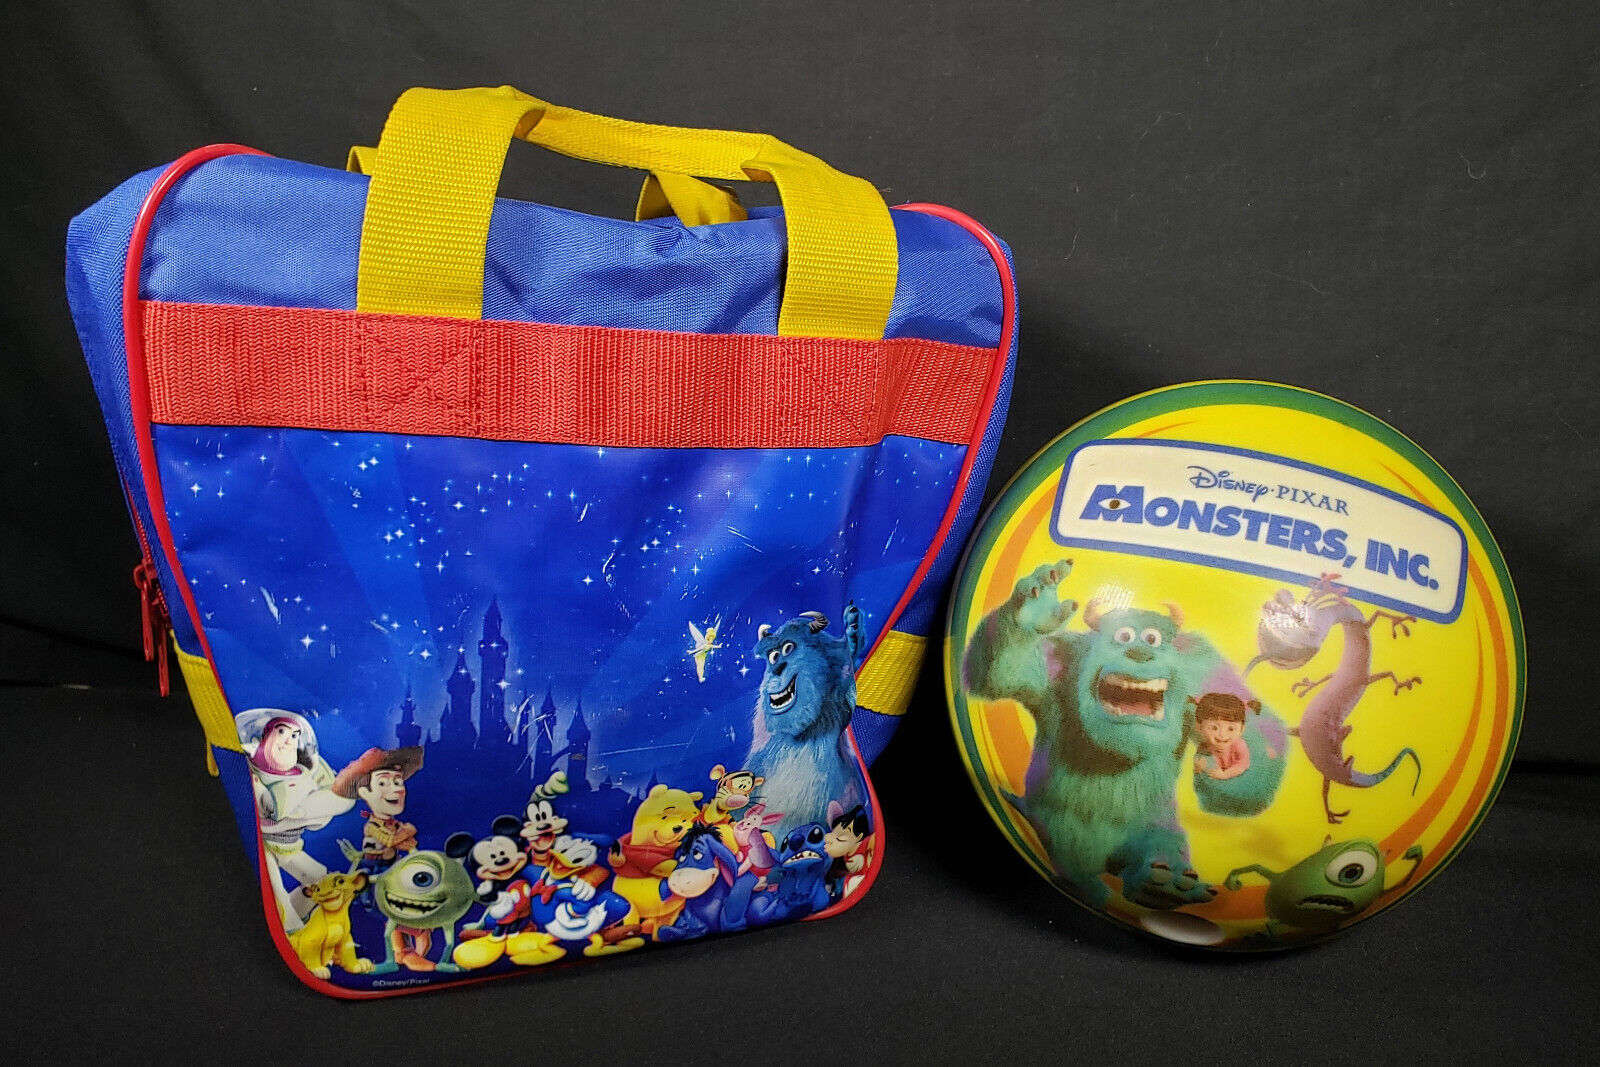 Disney Pixar Monsters Inc Brunswick Bowling pre-drilled 11lb Viz-A-Ball with Bag